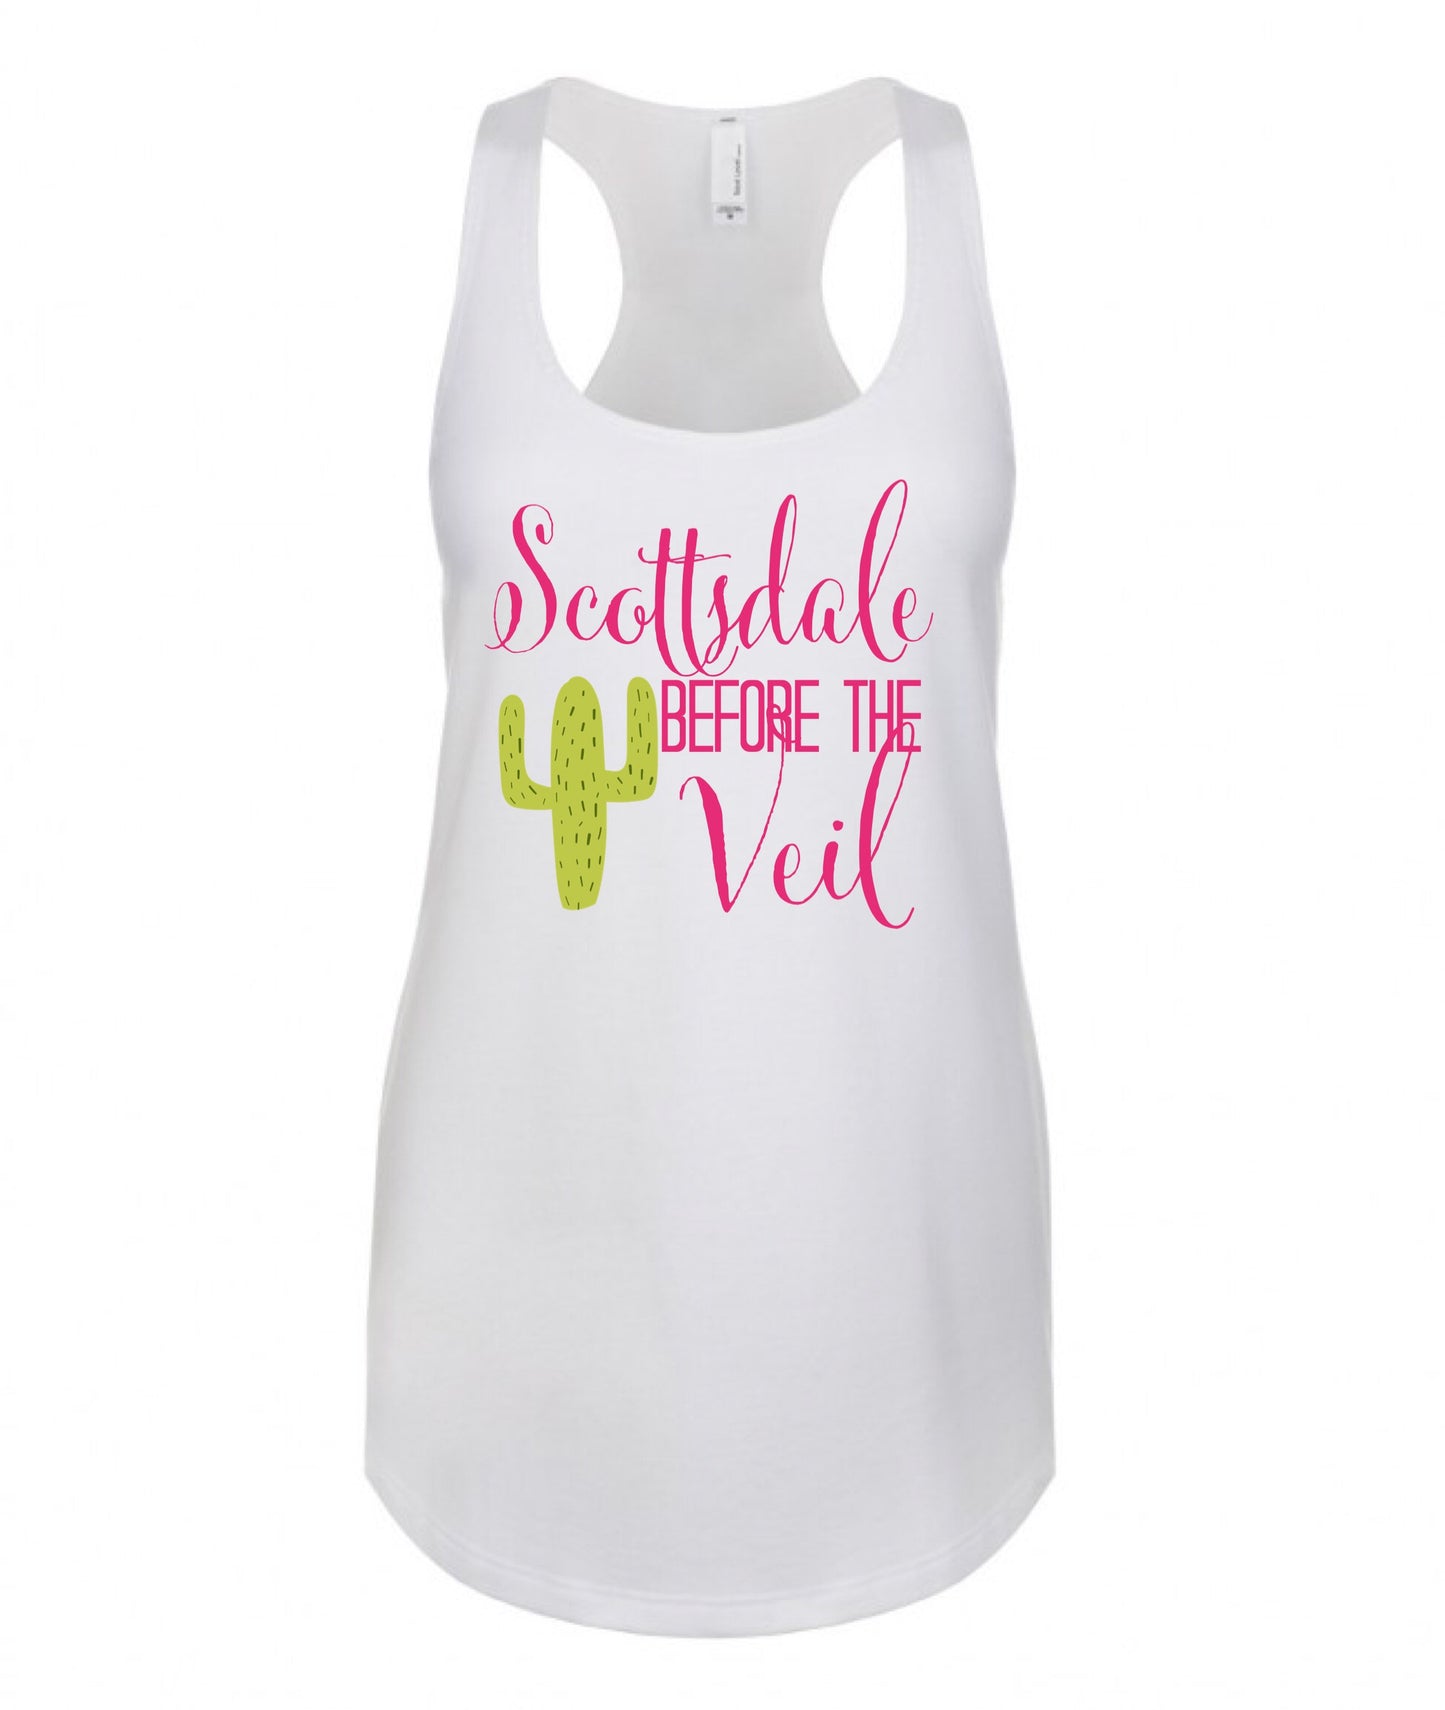 Scottsdale bachelorette tanks| Scottsdale party shirts| Bachelorette tanks| girls trip shirts| bachelorette shirts| Road trip| bridesmaid